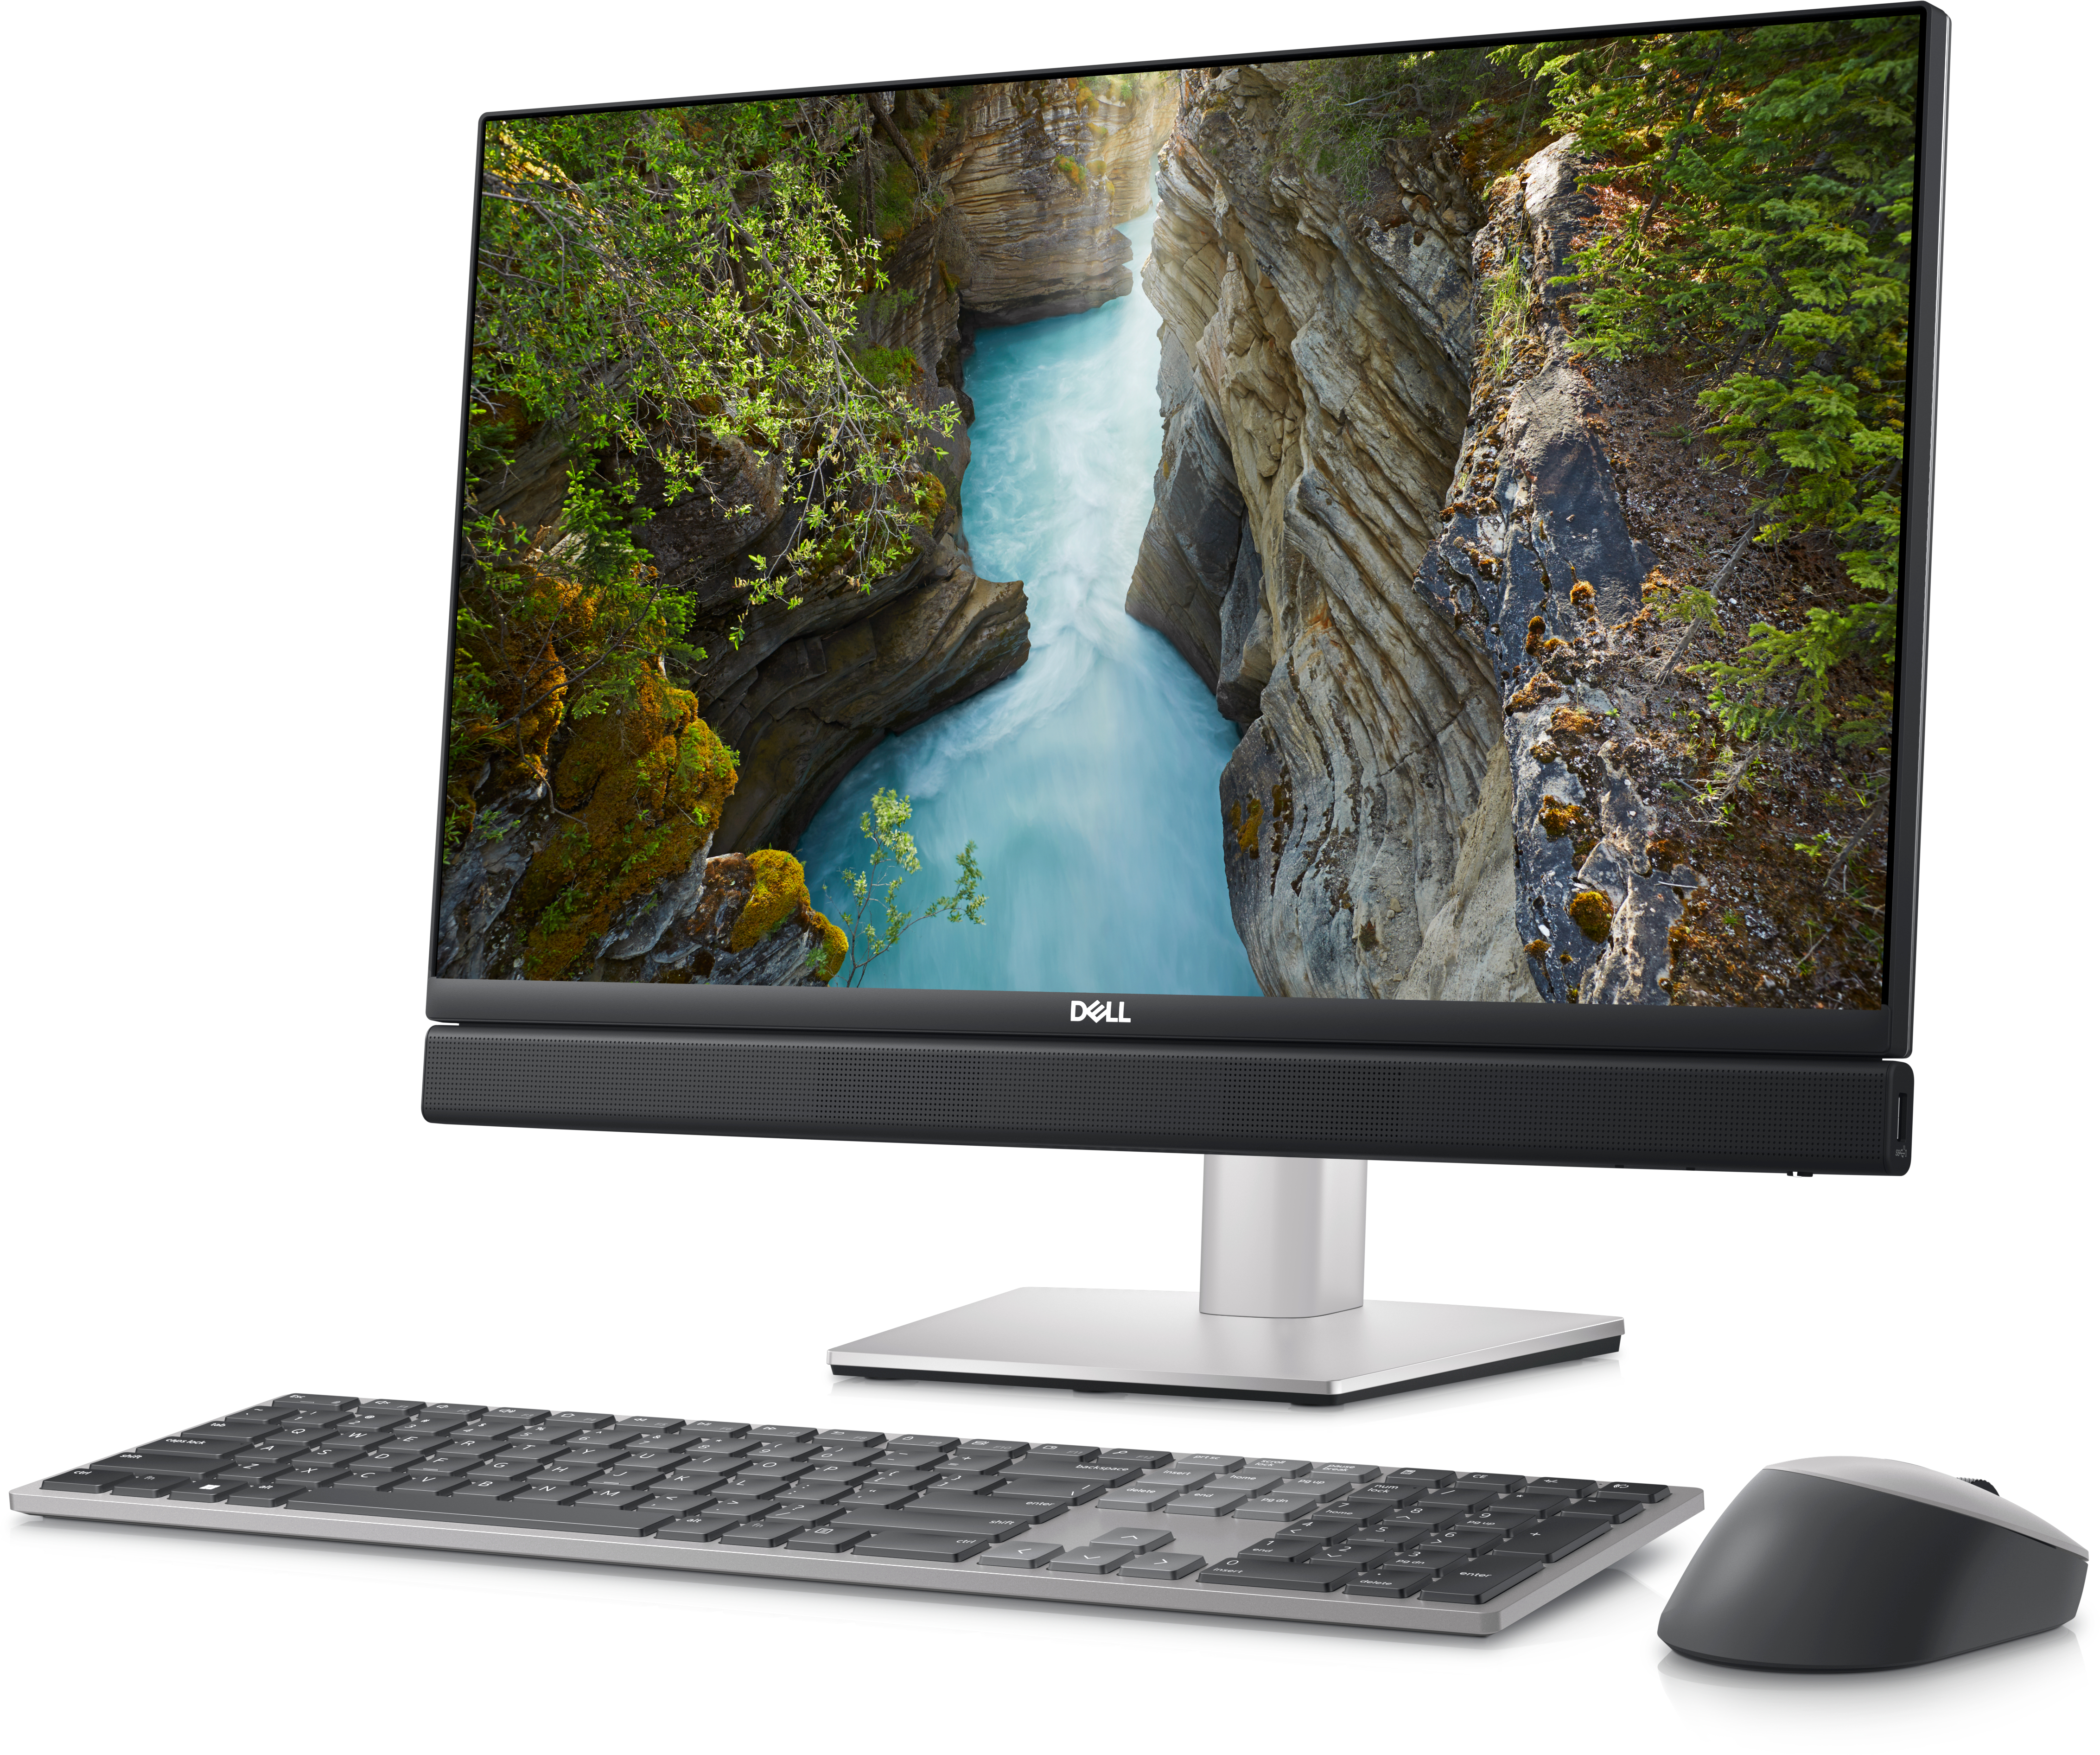 Dell OptiPlex 7410 All-in-One Business Desktop - W/ 13th Gen Intel Core - 23.8 FHD Screen - 8GB - 256G